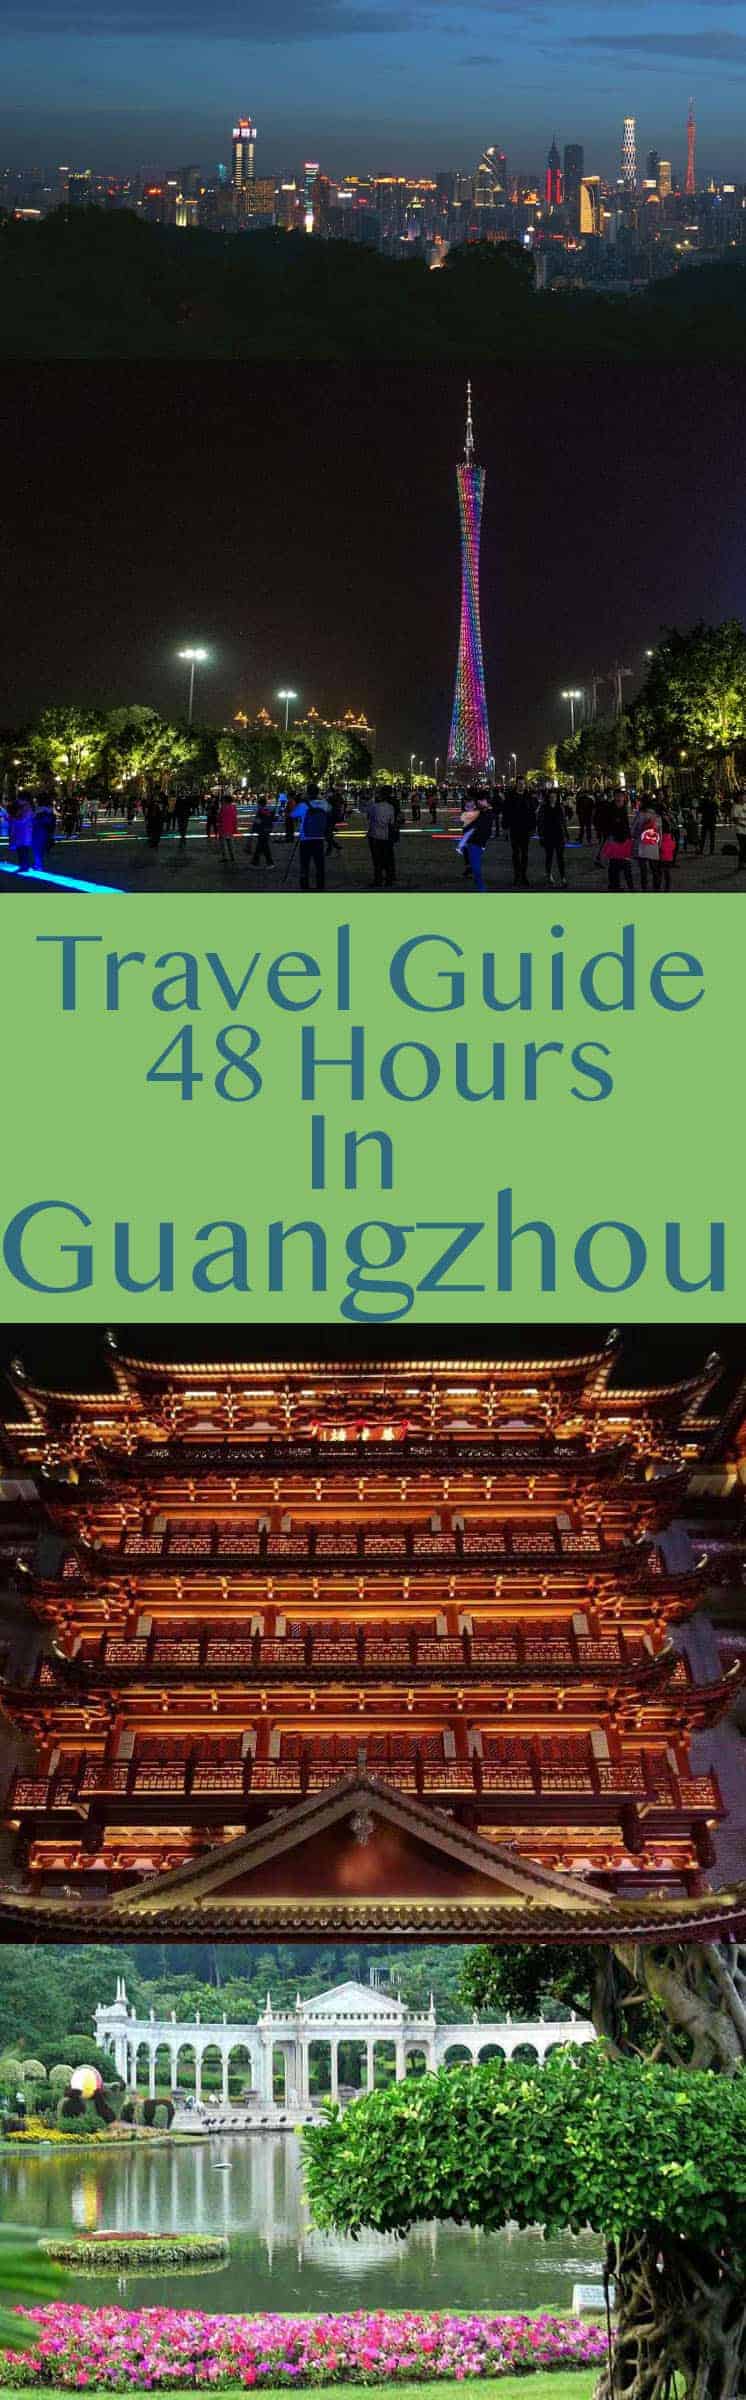 Travel Guide to Guangzhou China´s third biggest city